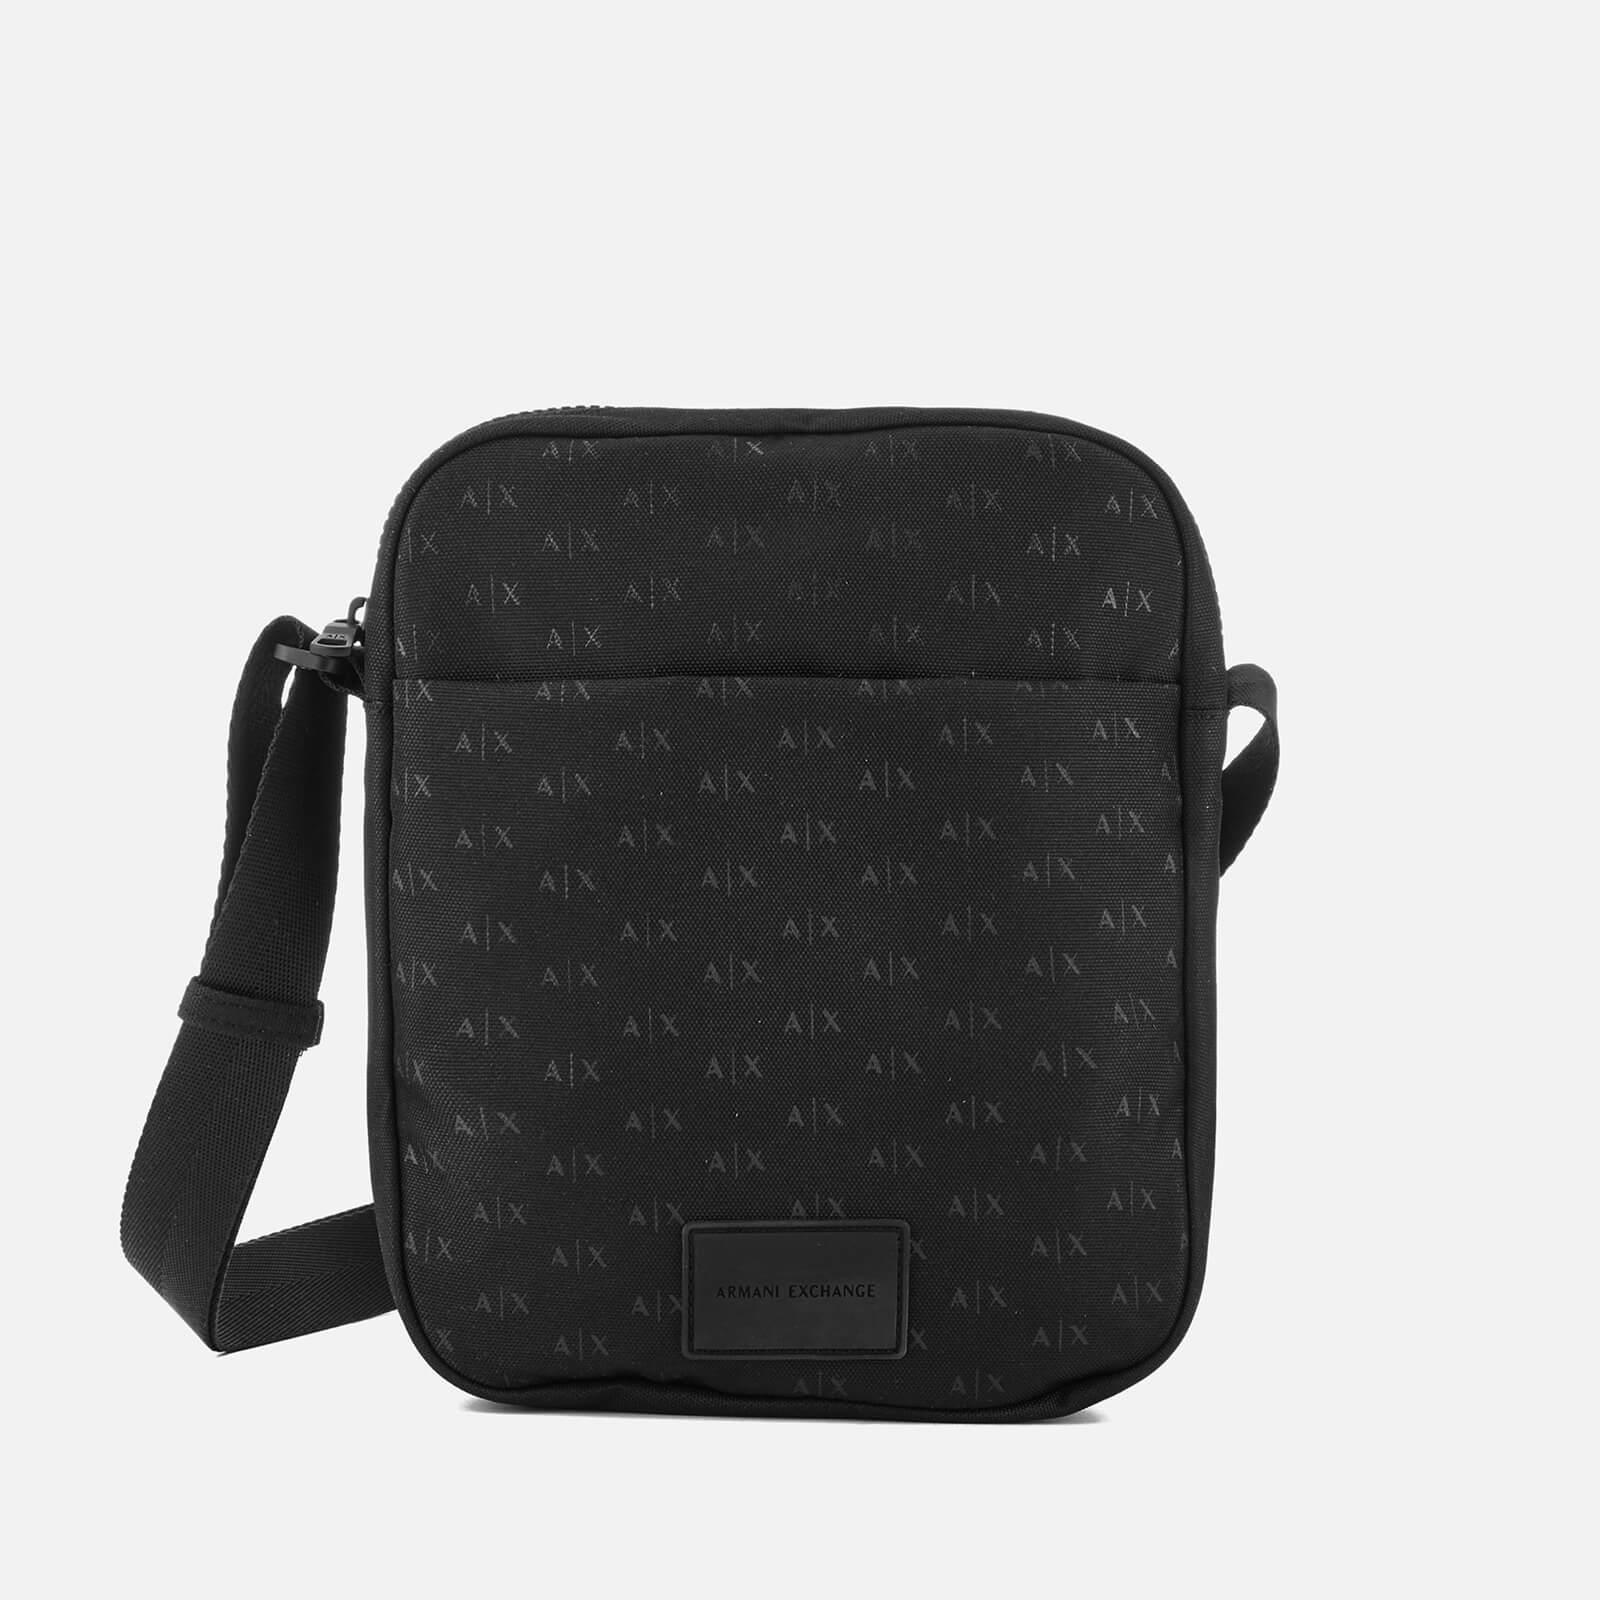 Armani Exchange Ax All Over Logo Cross Body Bag in Black for Men - Lyst